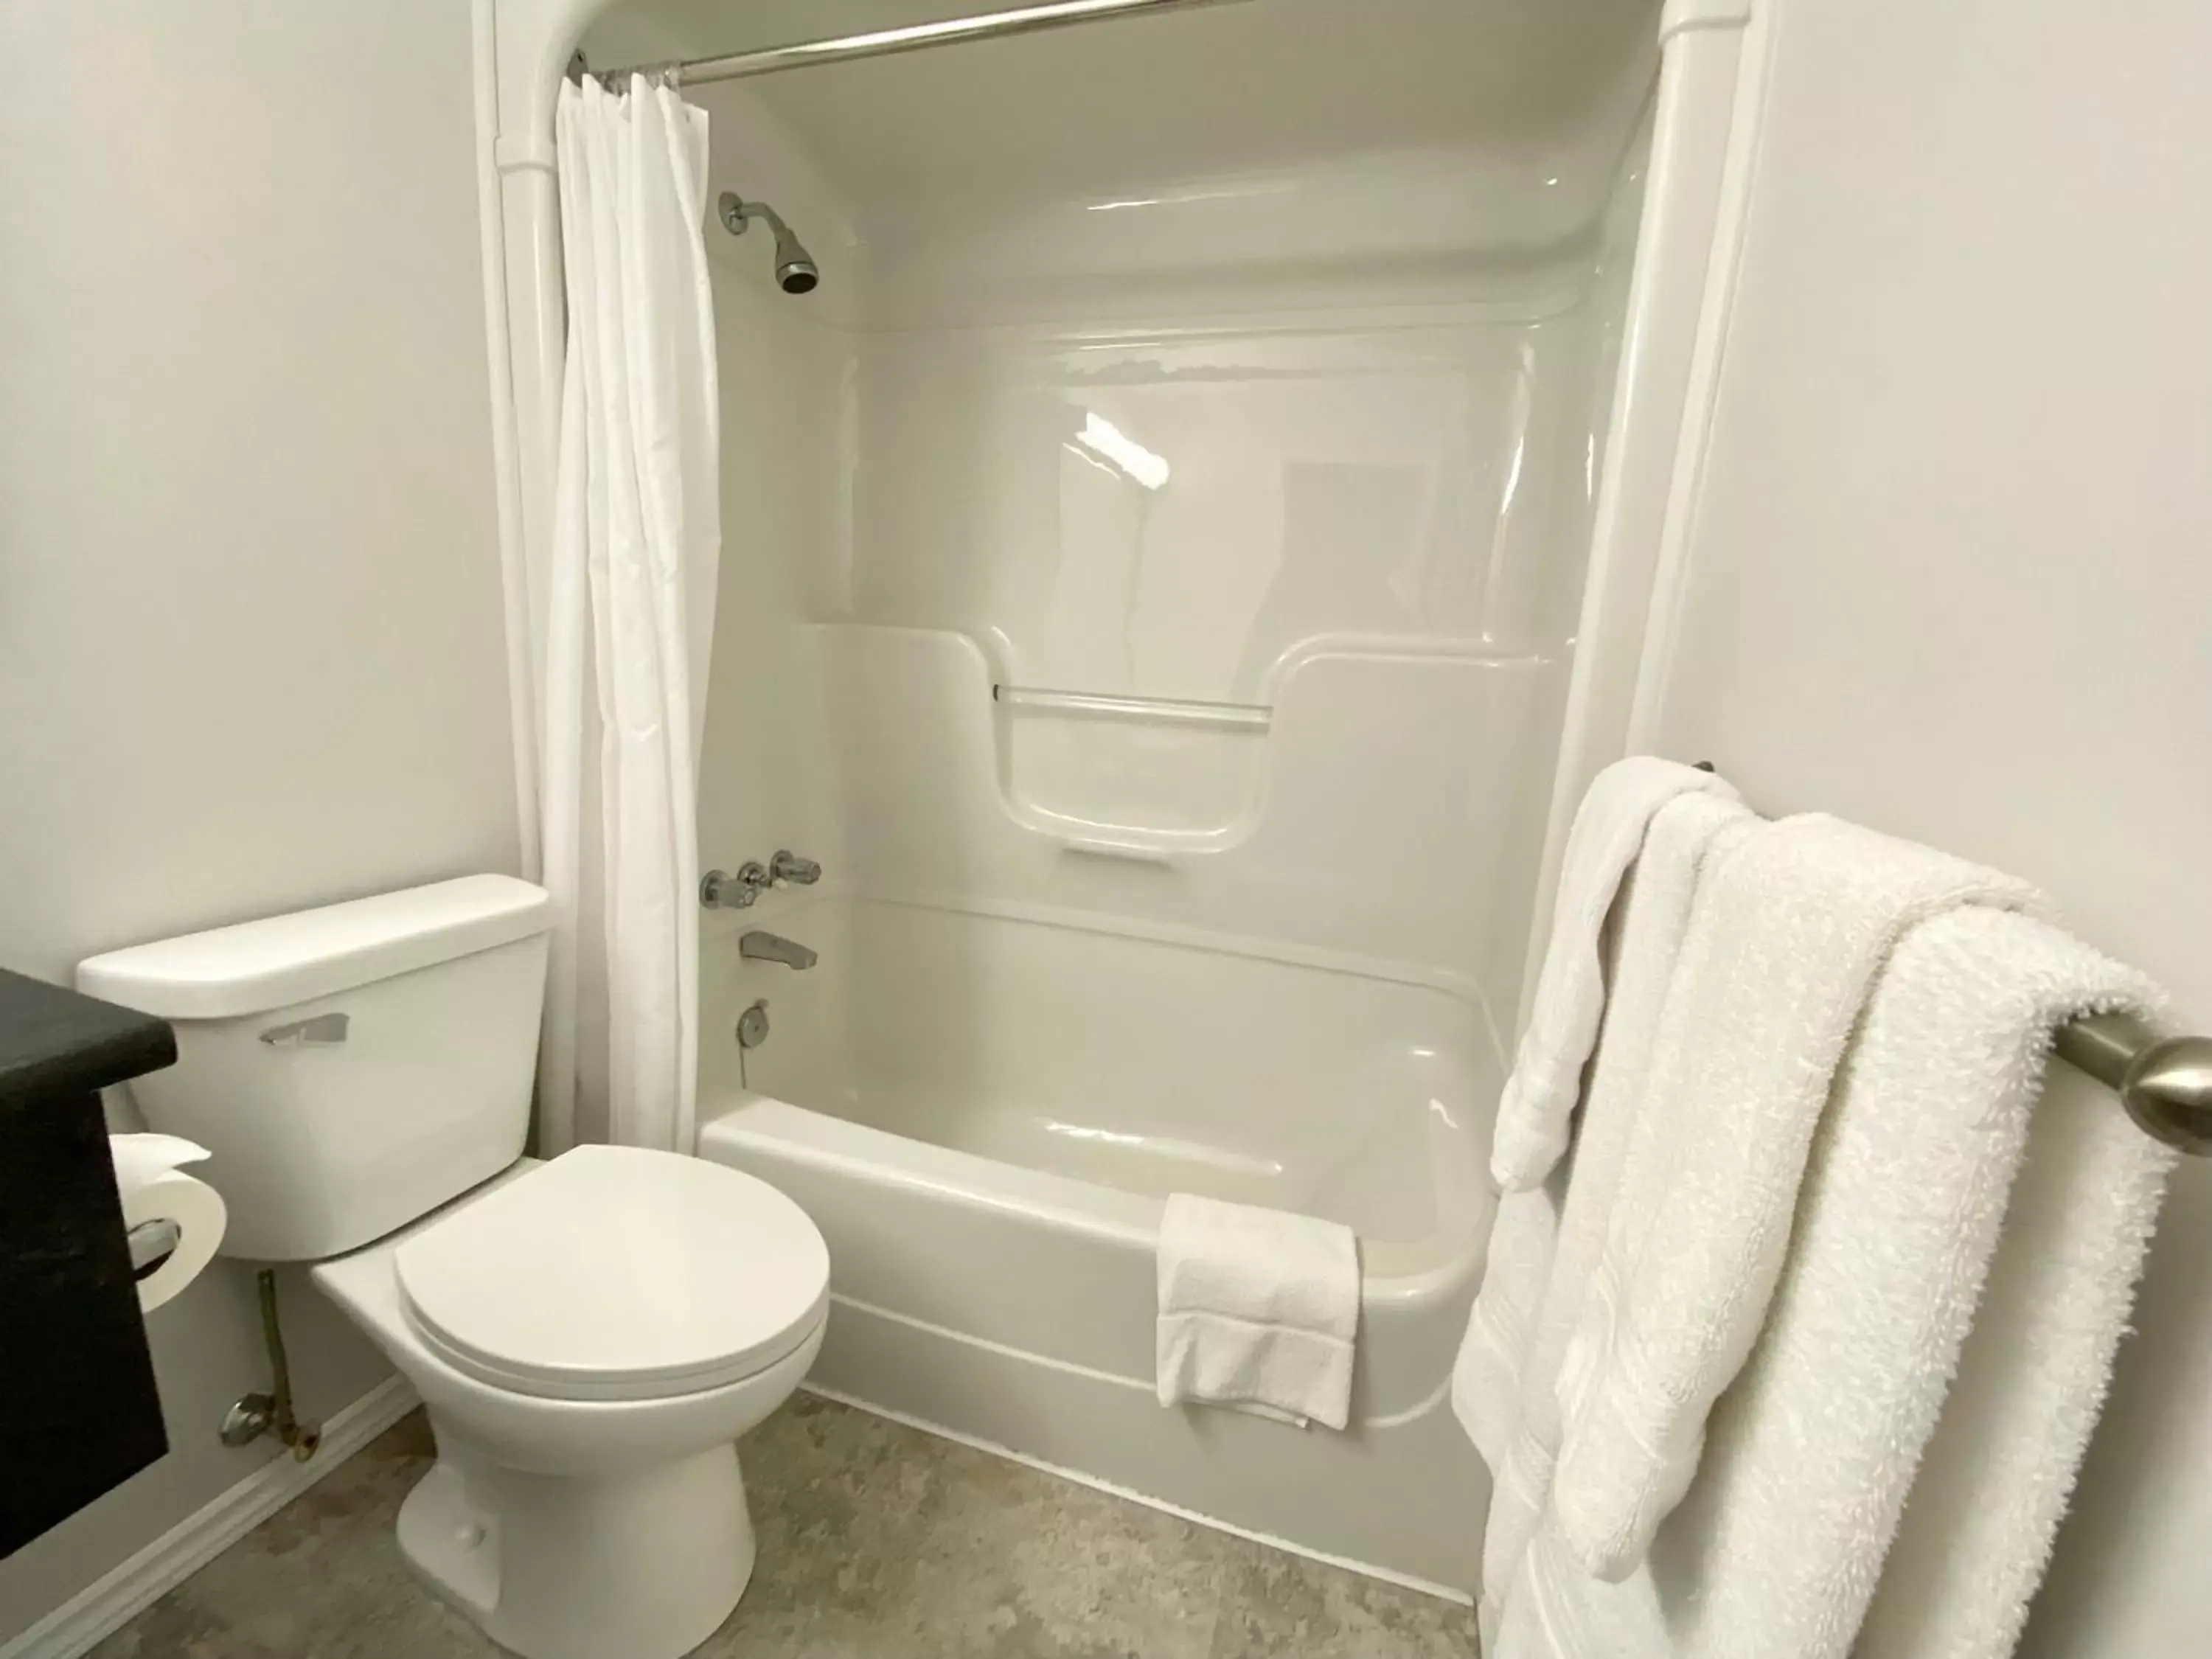 Bathroom in New Age Inn - Voyageur